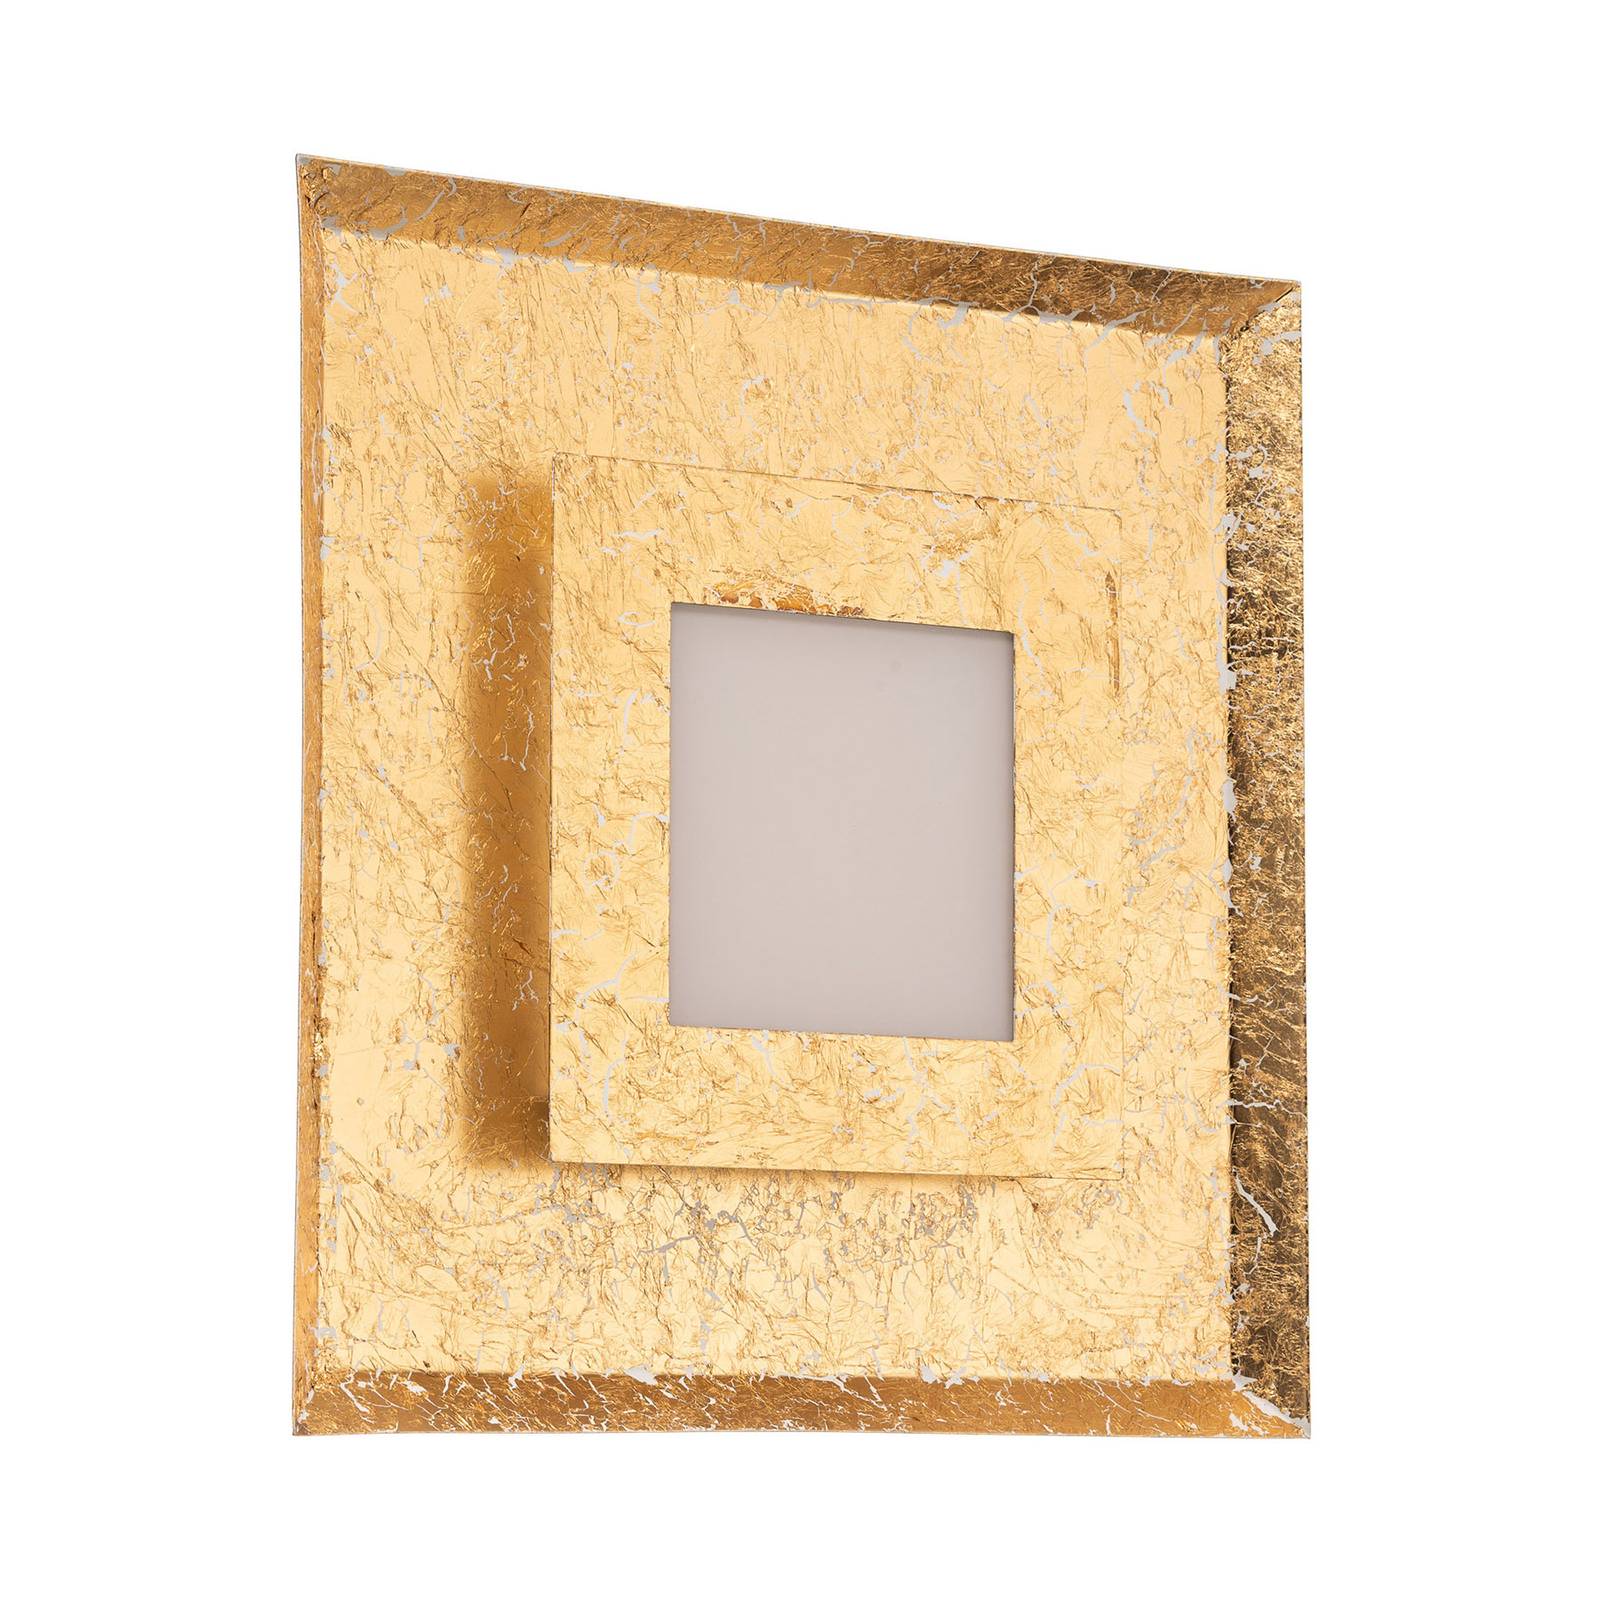 Eco-Light LED-Wandleuchte Window, 39x39 cm, gold